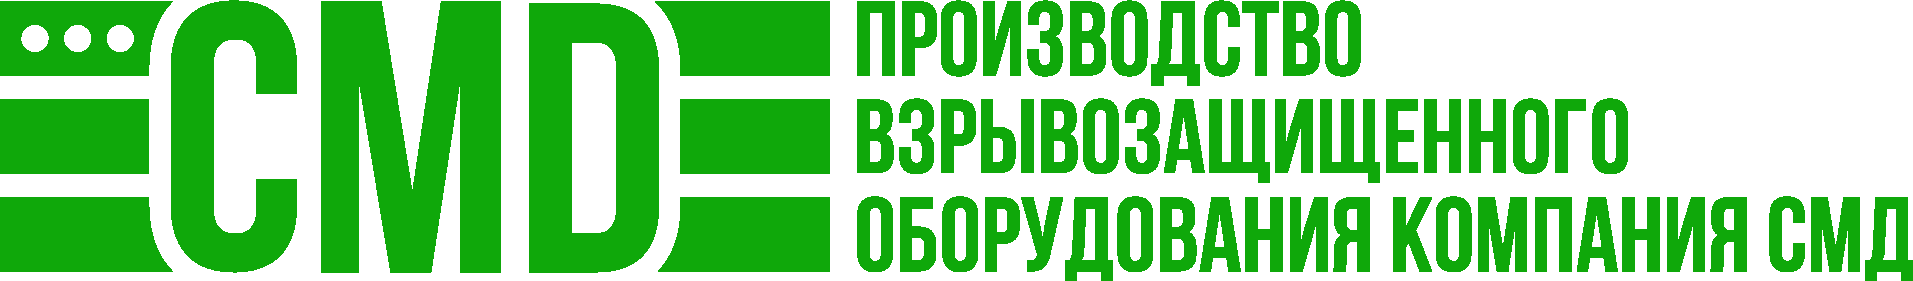 СМД logo